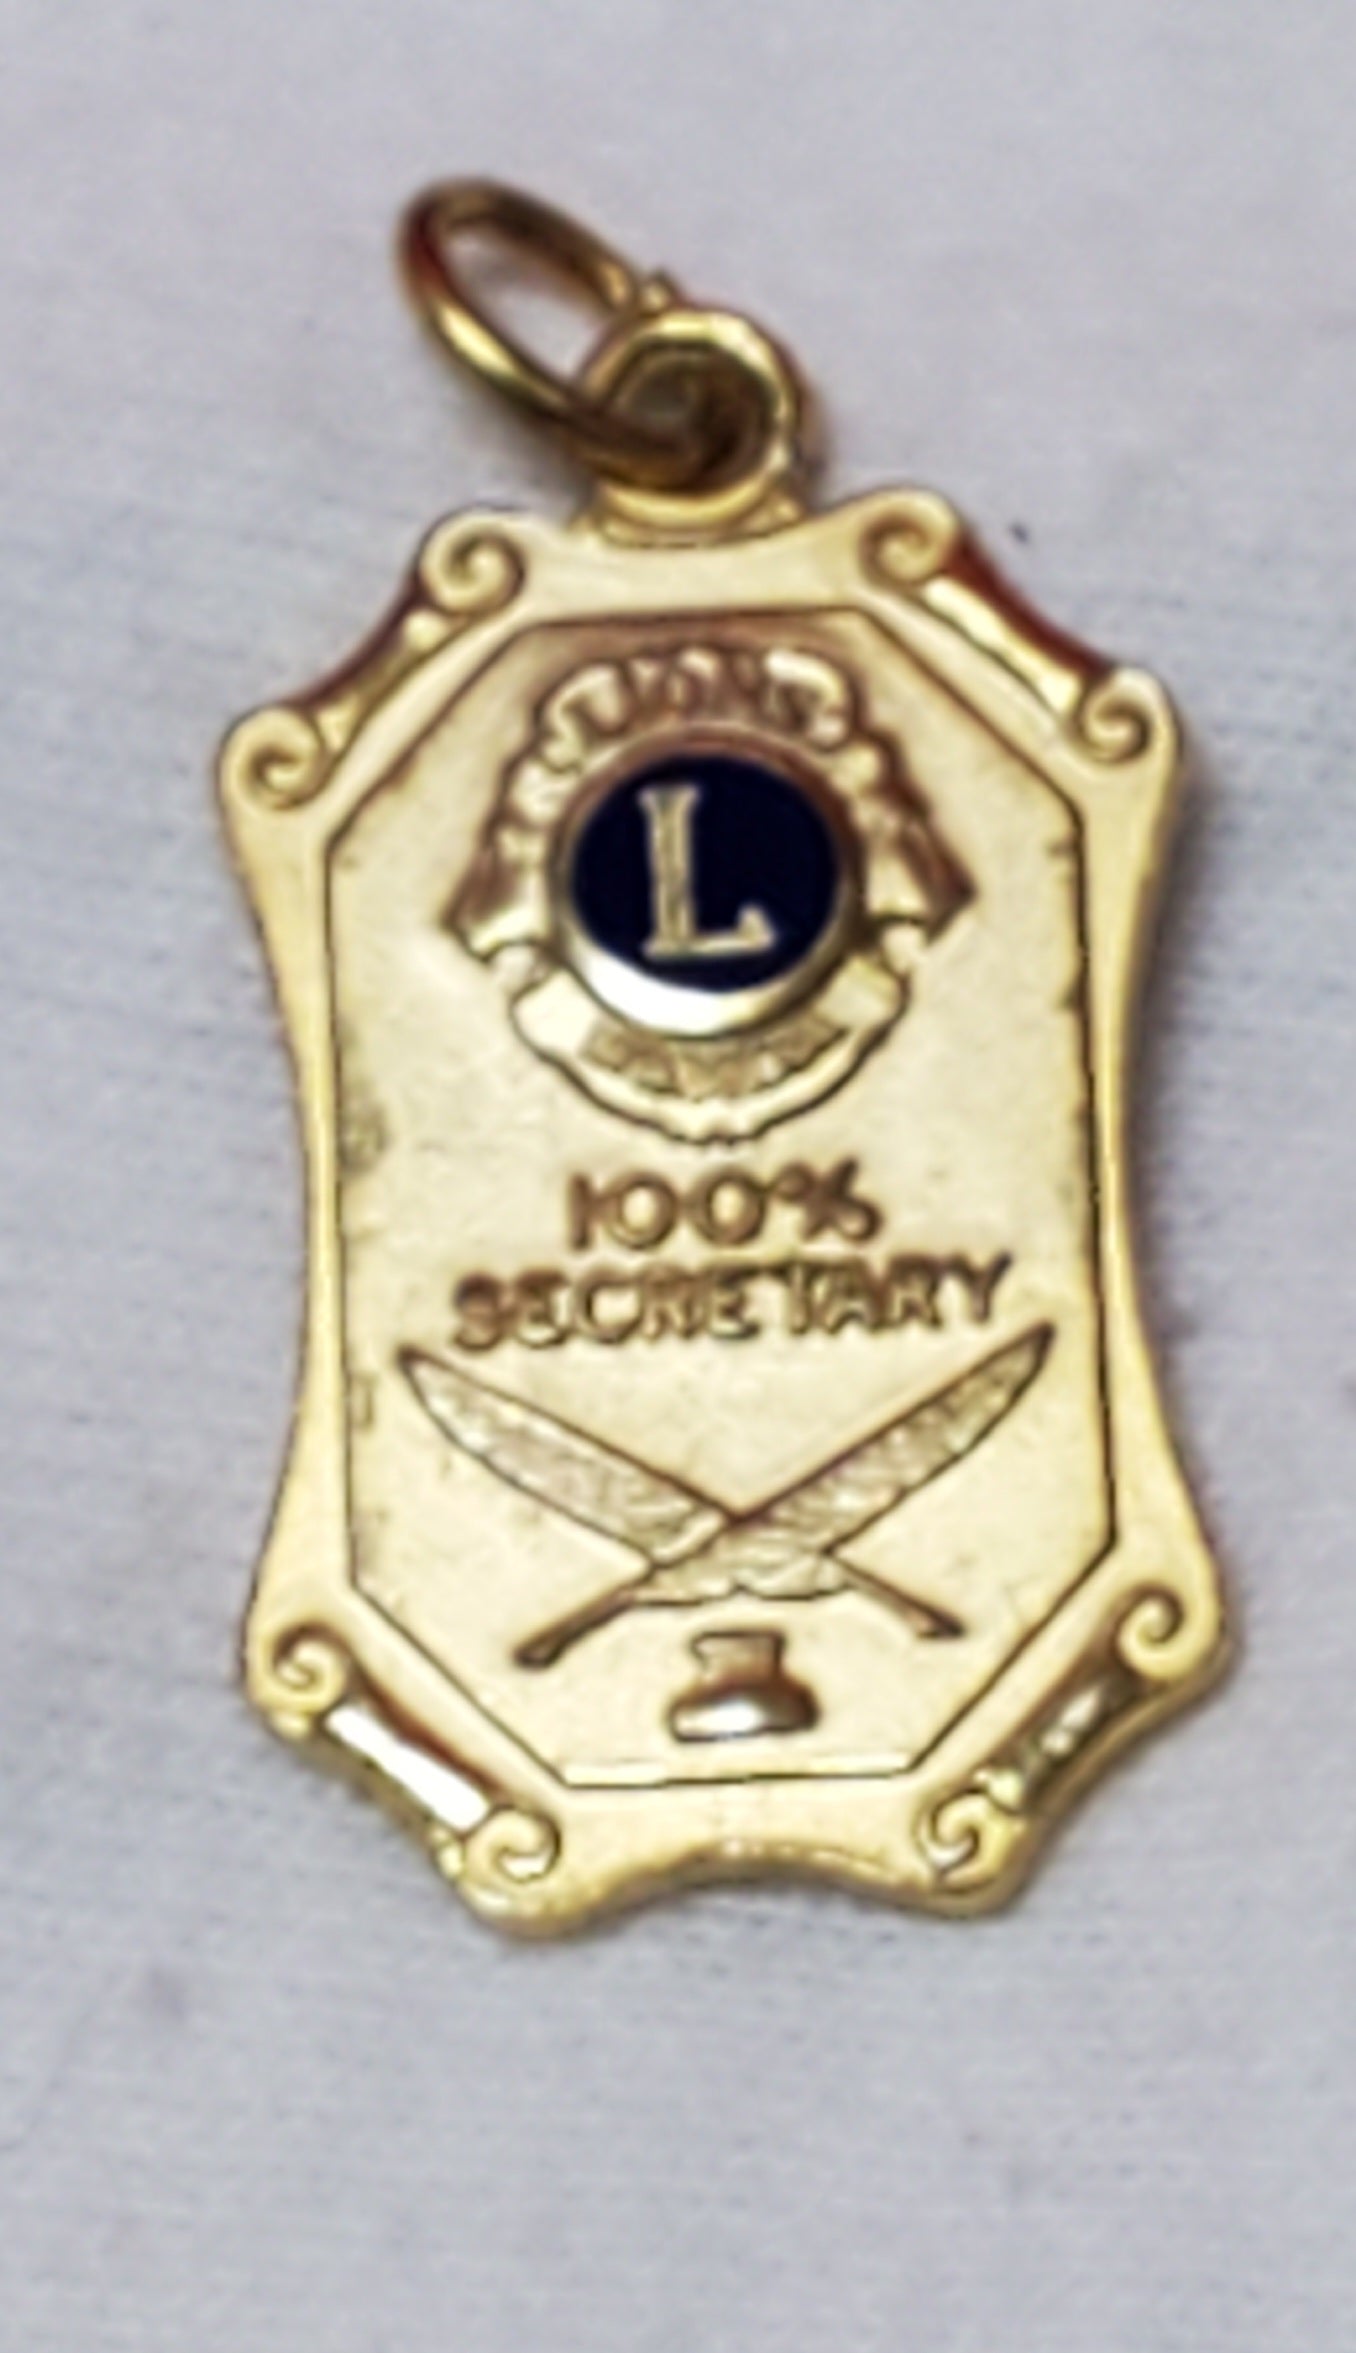 VINTAGE Lions Club International 100% SECRETARY AWARD Dangler Lapel Pin (06o15)